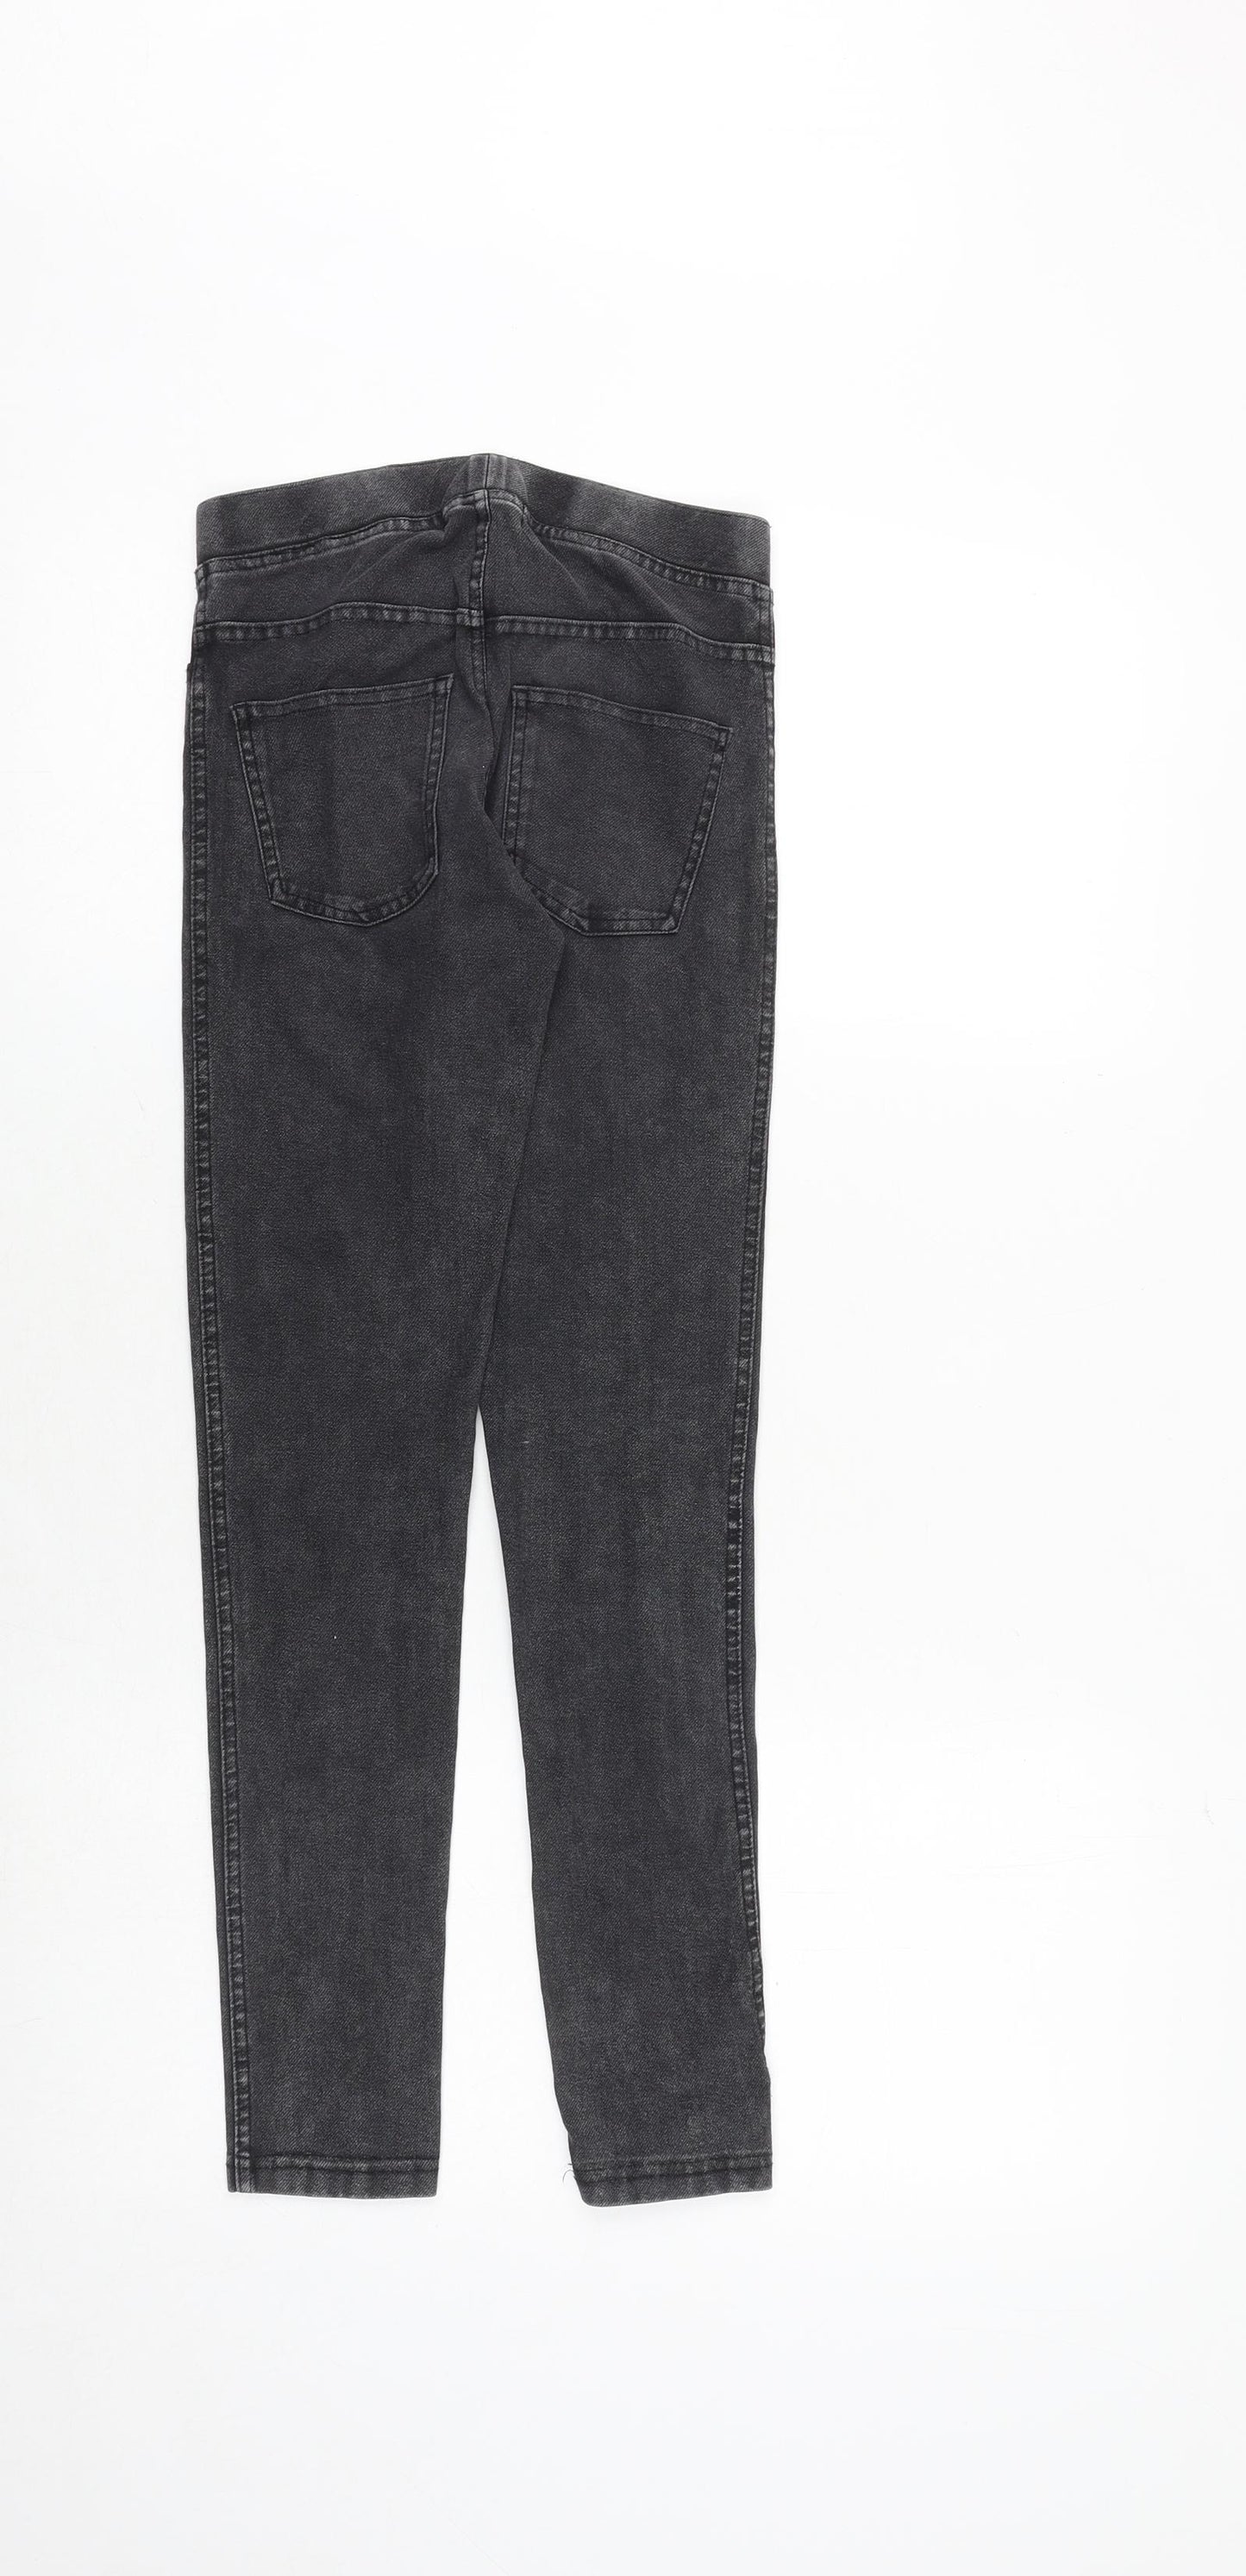 H&M Girls Grey Cotton Jegging Jeans Size 11-12 Years Regular